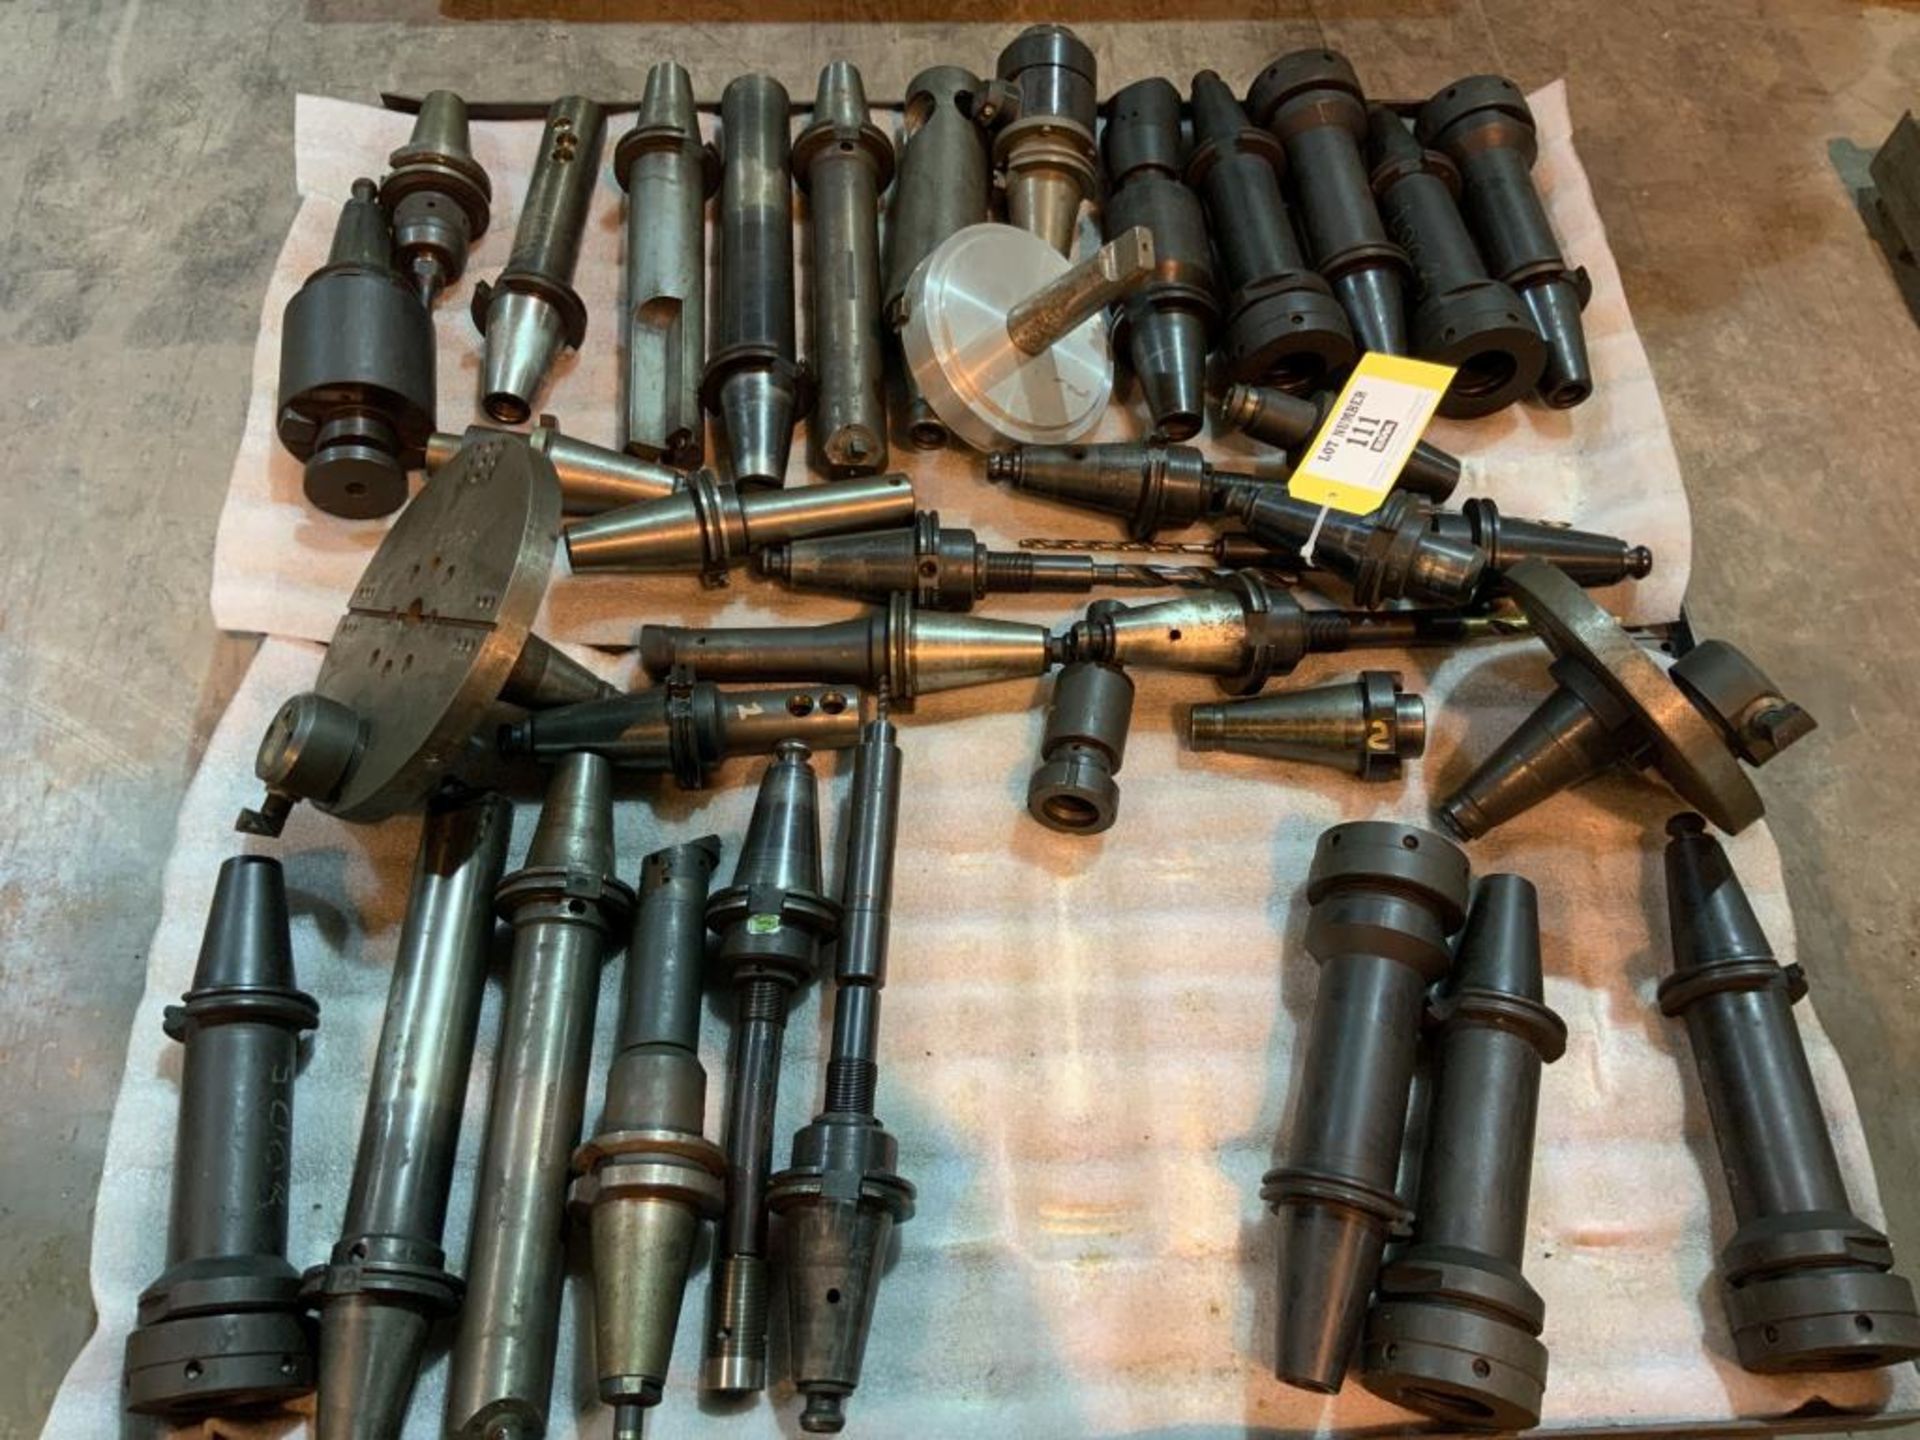 Assorted tool holders